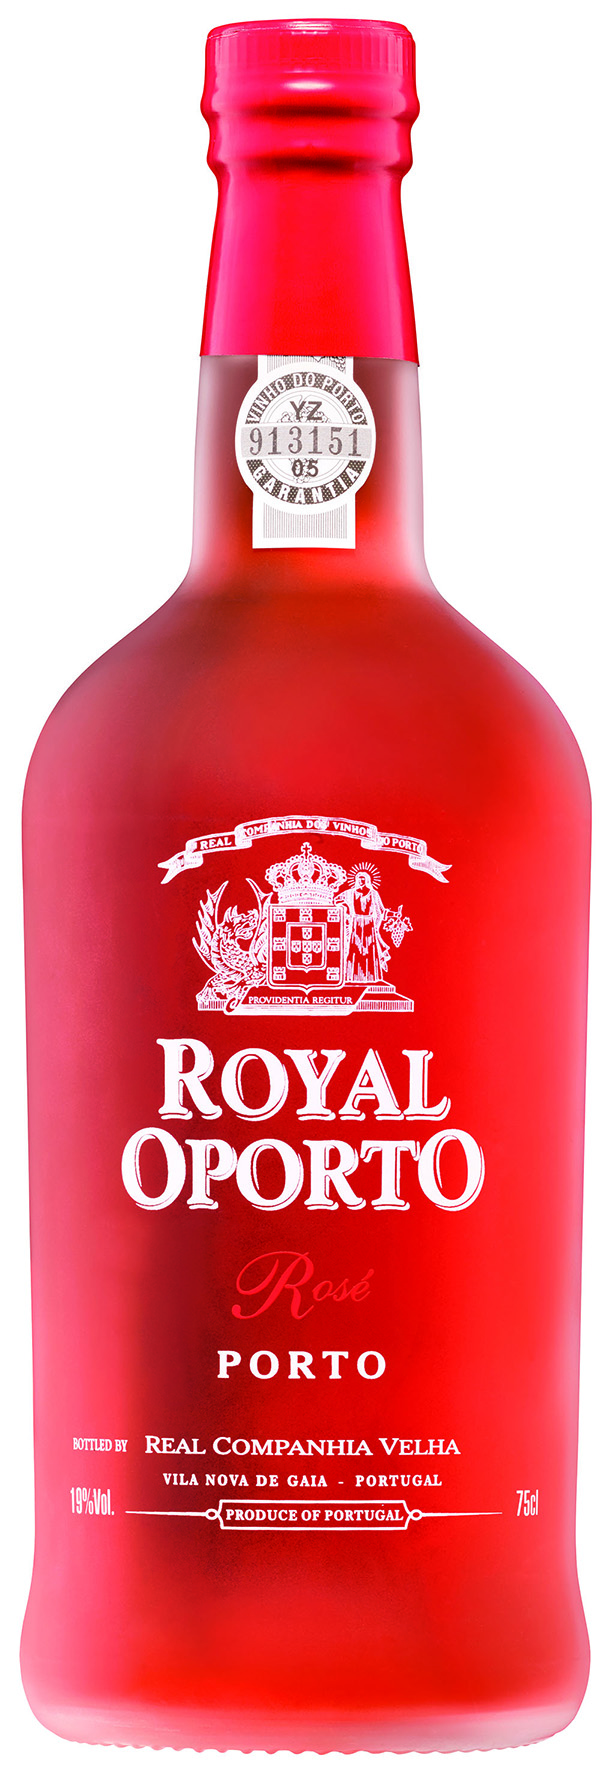 Royal Oporto Rose Portwein 19 % 0.75L